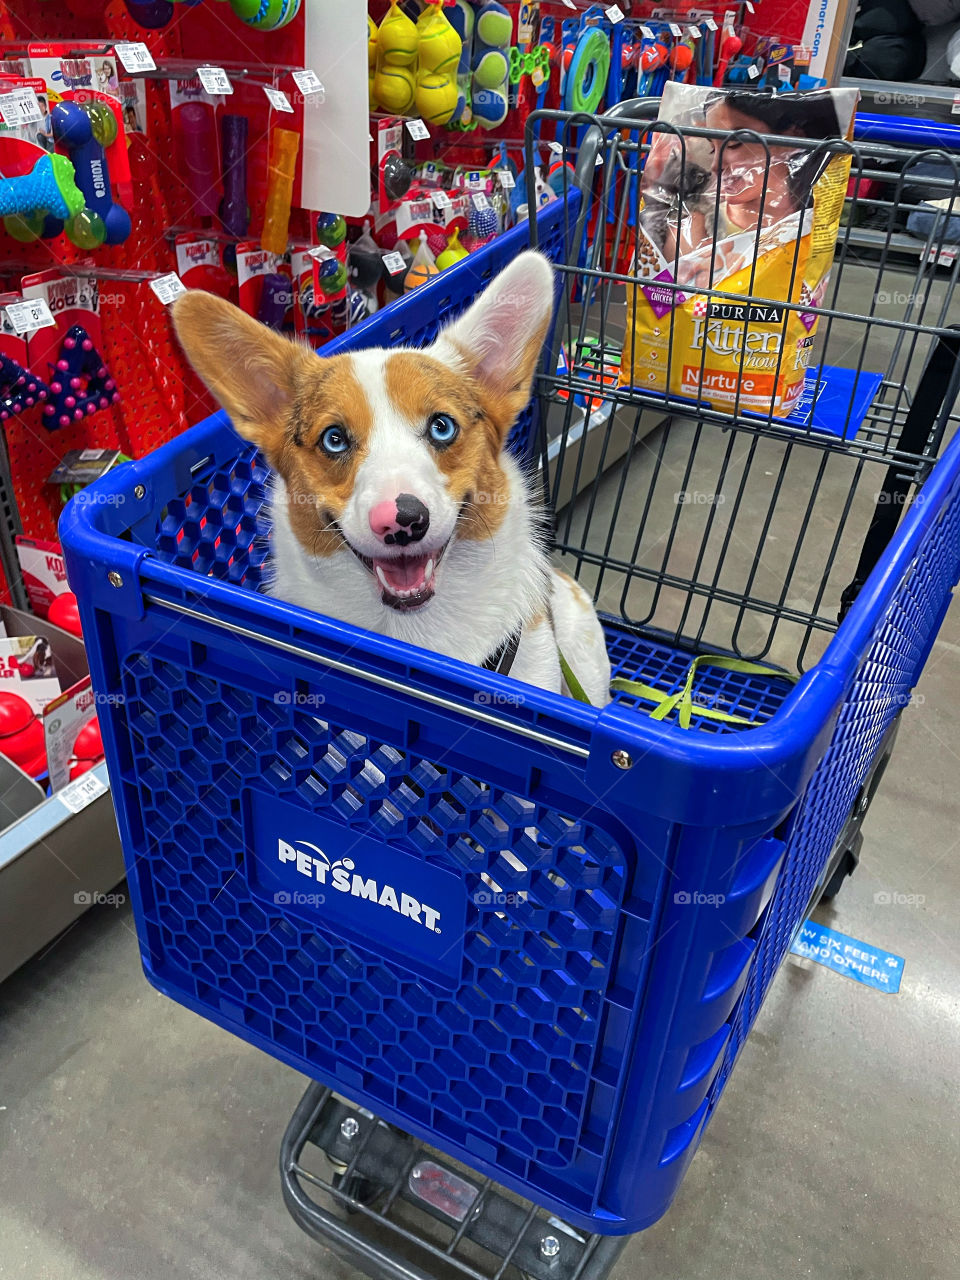 Corgi riding in shopping cart Petsmart fun good times blue eyes big ears happy dog smiling 